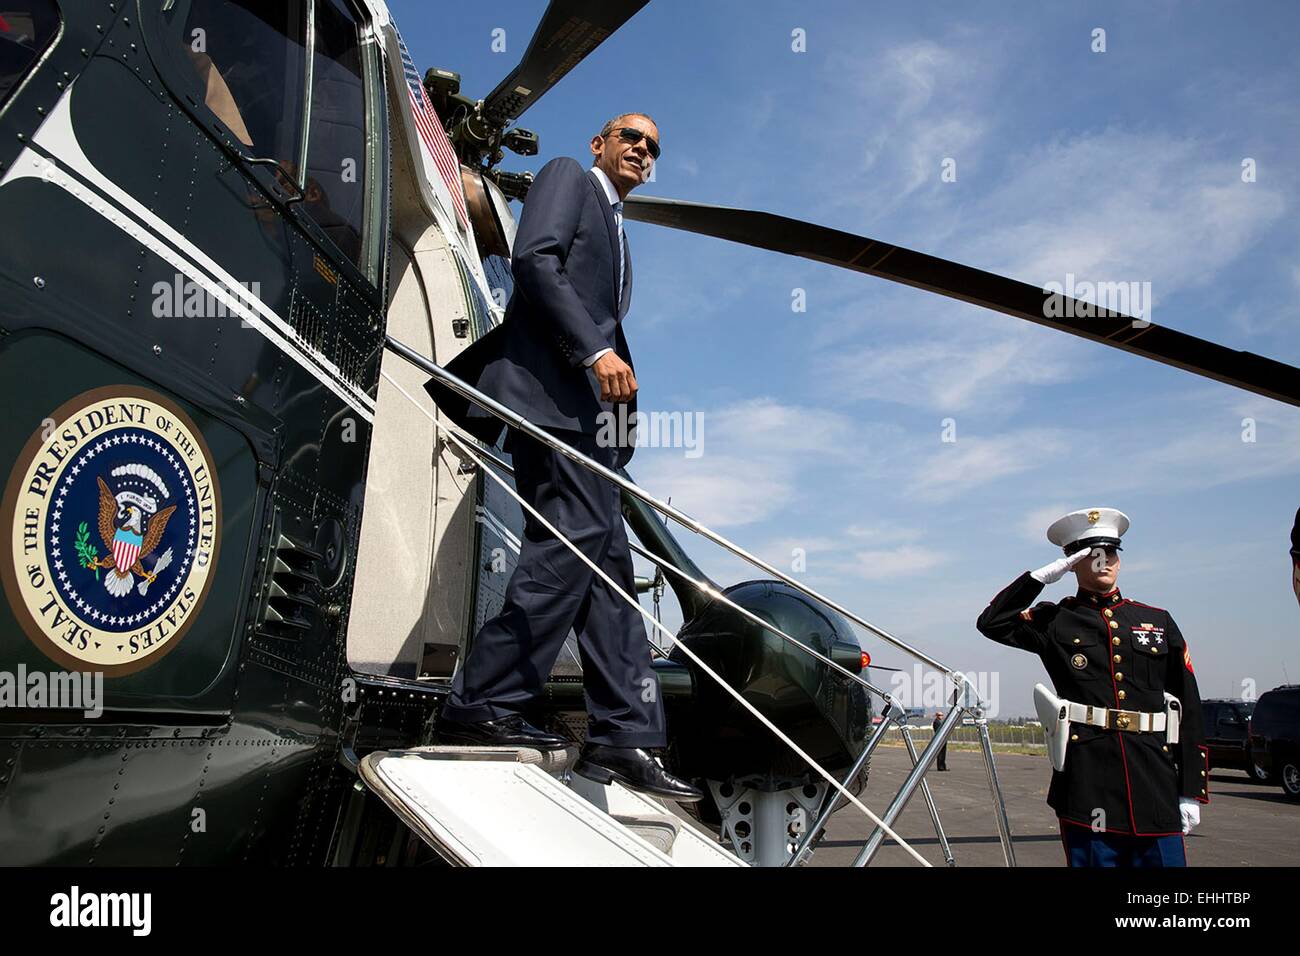 File:Barack Obama walks from Air Force One to board Marine One, 2011.jpg -  Wikimedia Commons